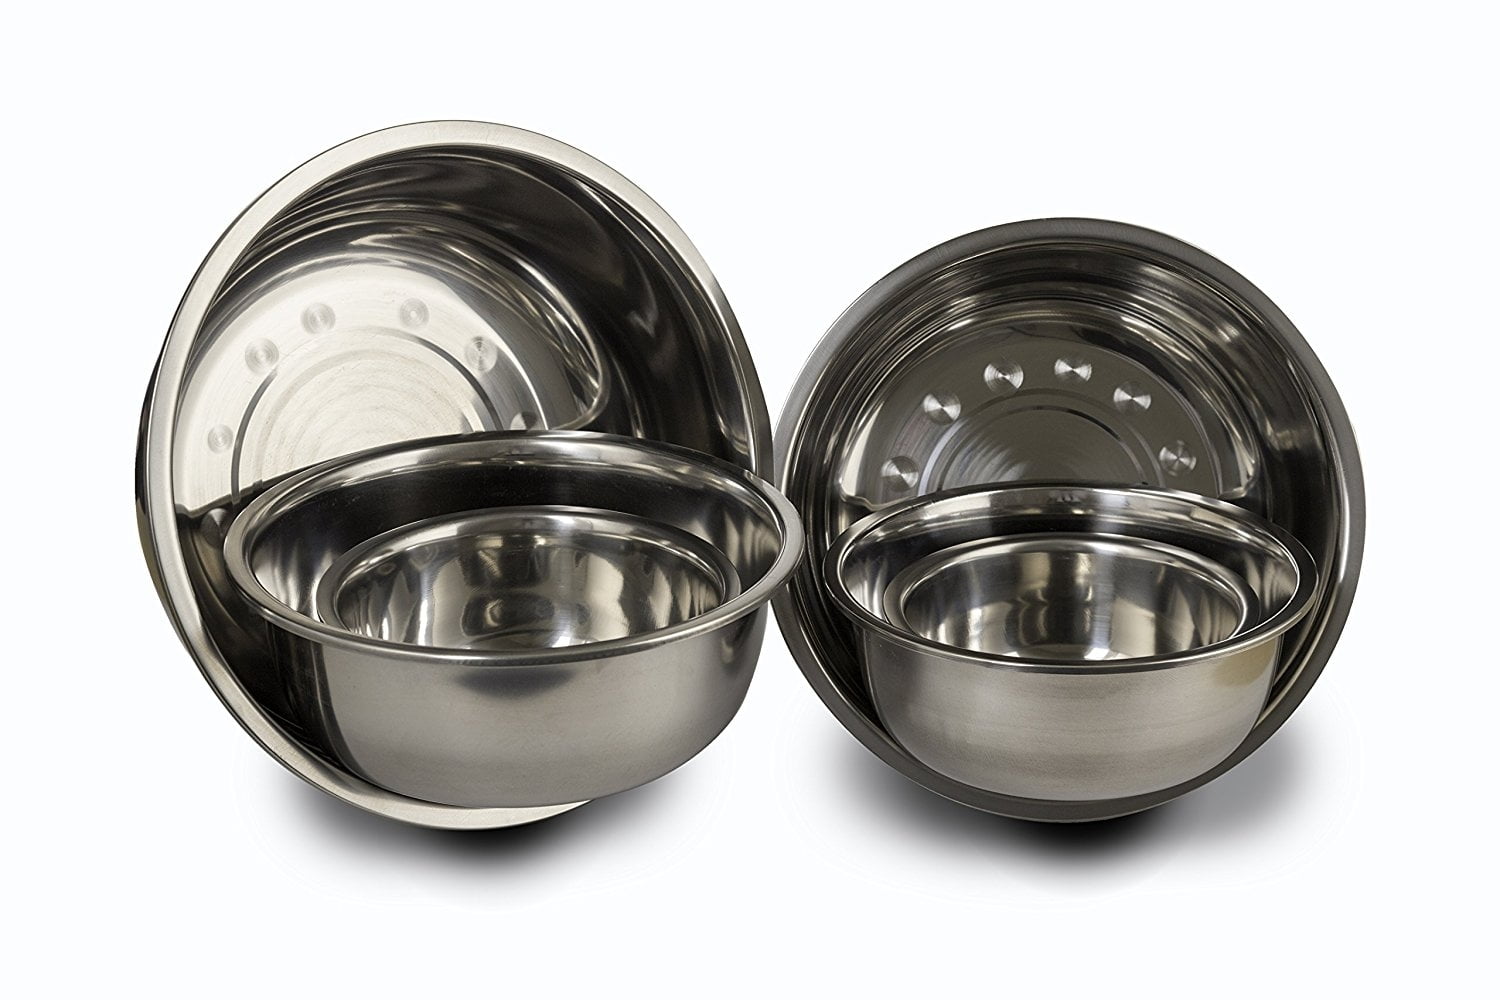 Premium Polished Mirror Nesting Stainless Steel Mixing Bowl - 13.5 Quart